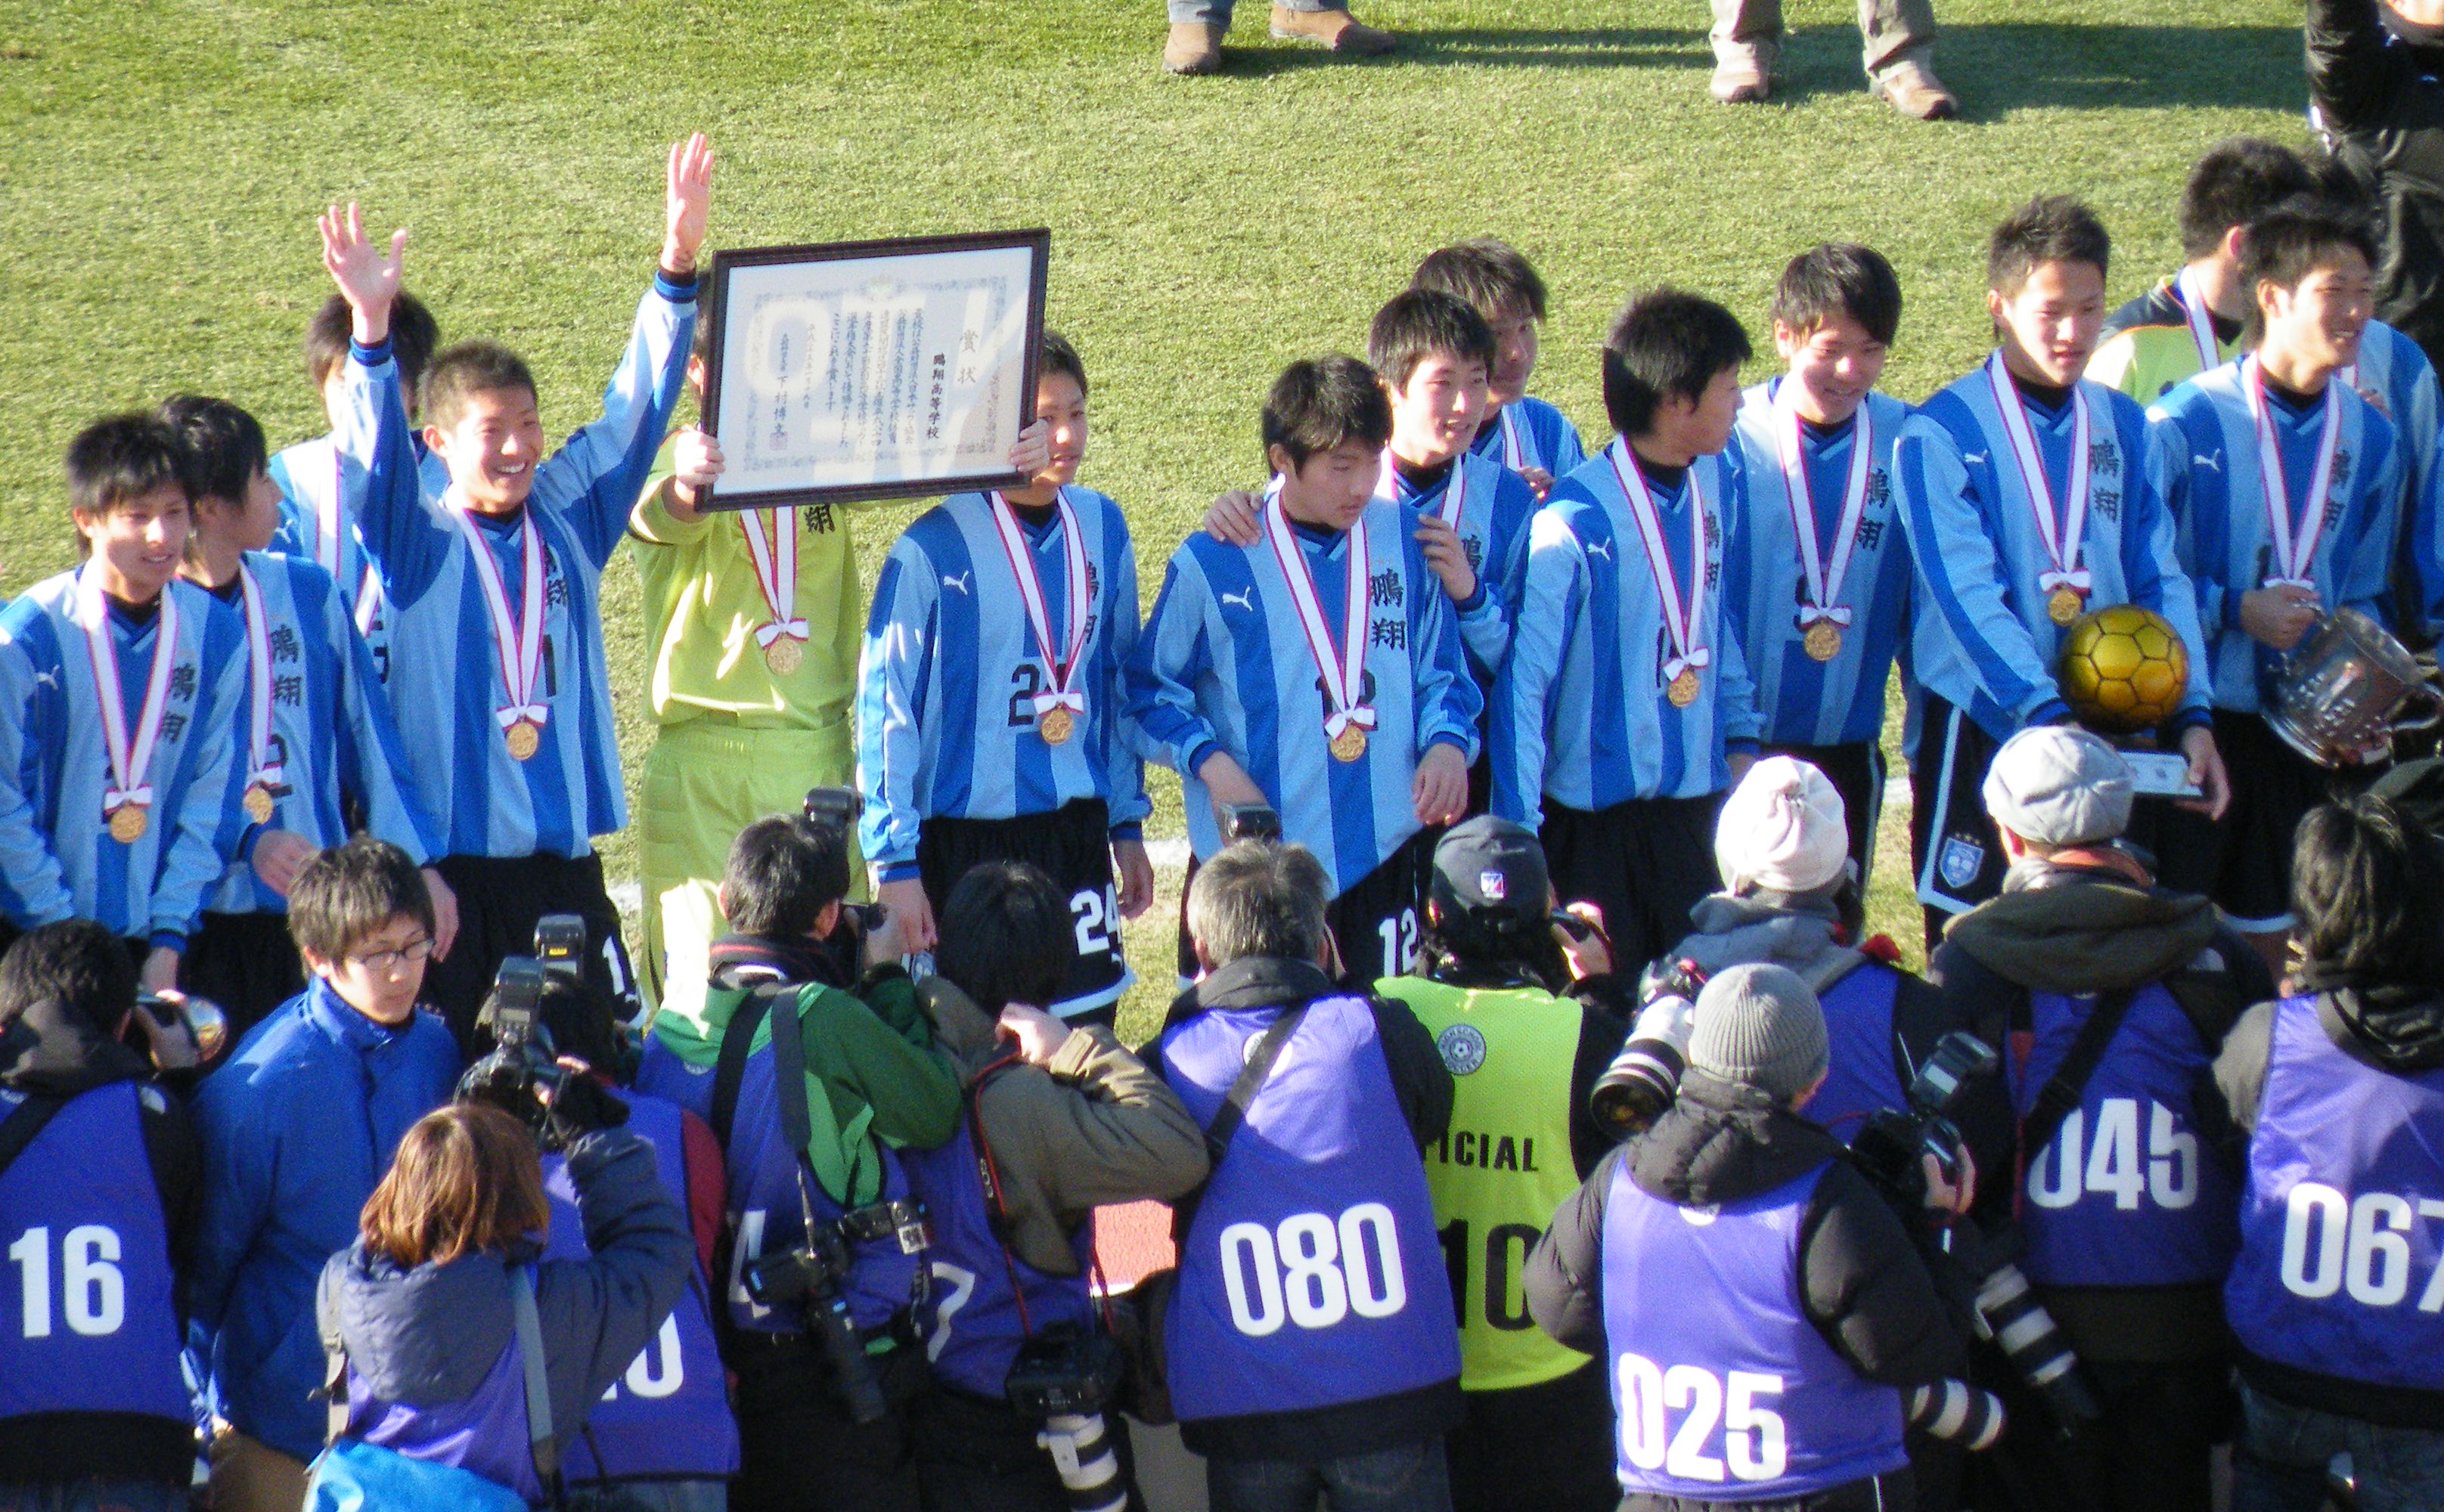 第91回全国高等学校サッカー選手権大会 Wikipedia